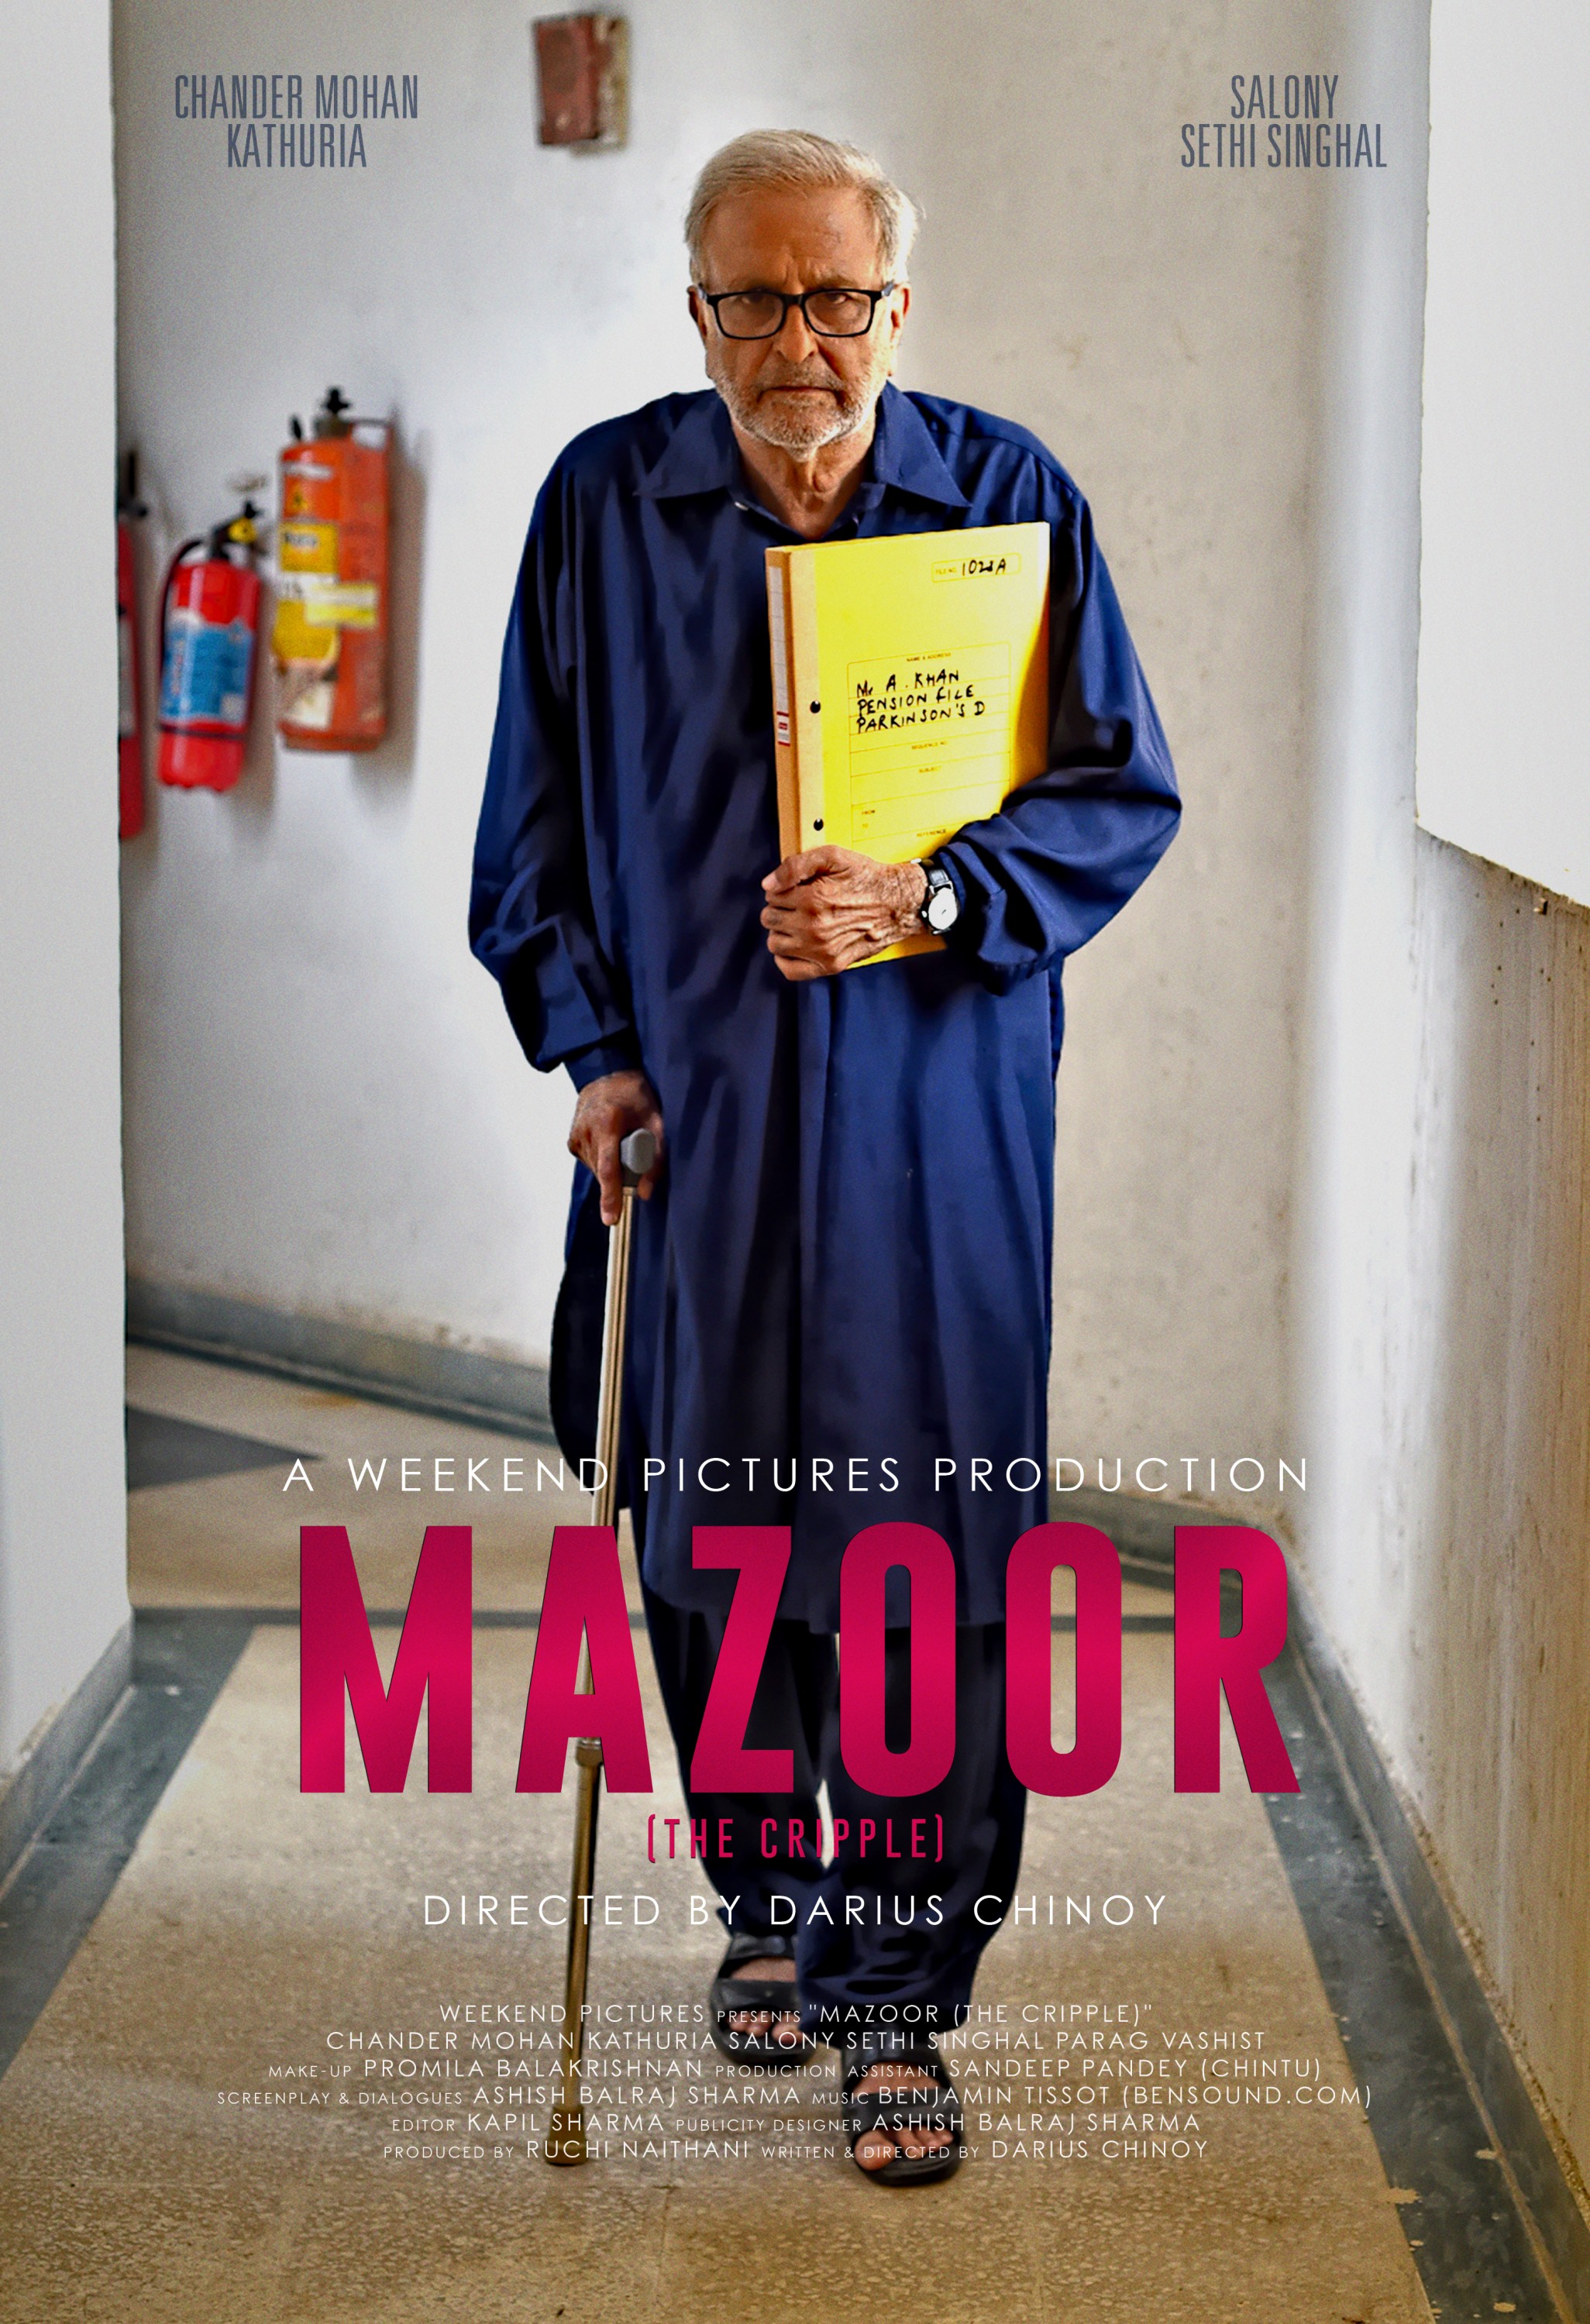 Mega Sized Movie Poster Image for Mazoor: The Cripple